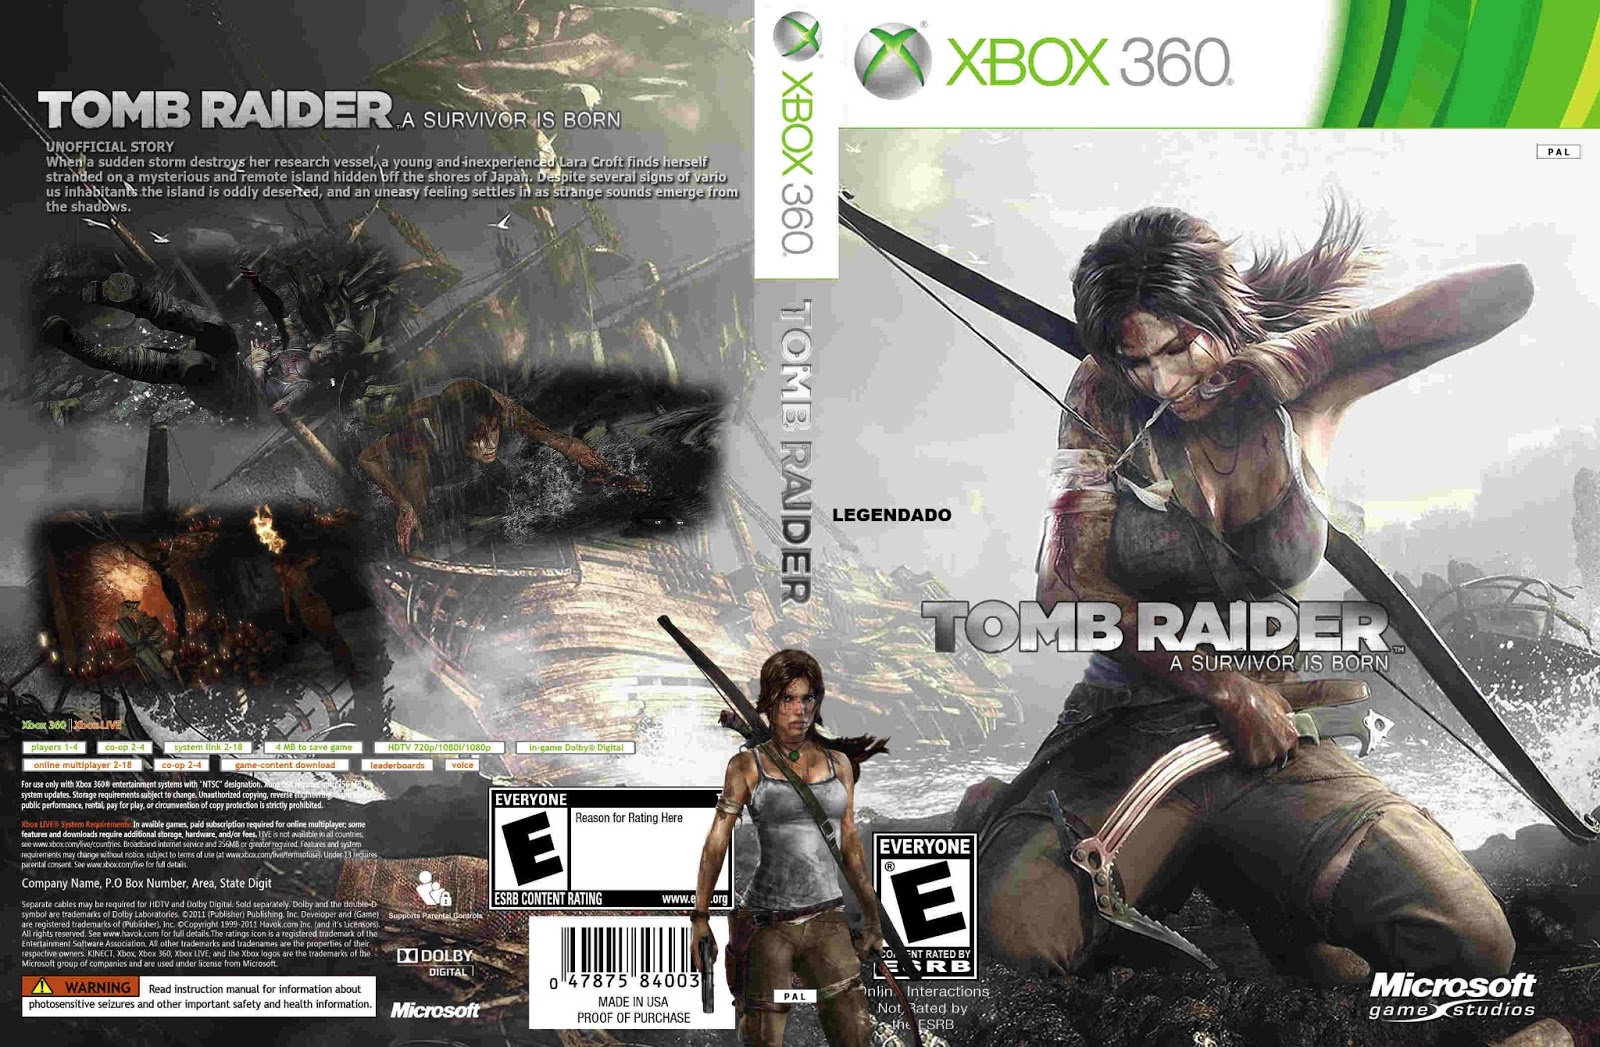 HARD GAMESS: TOMB RAIDER - XBOX 360